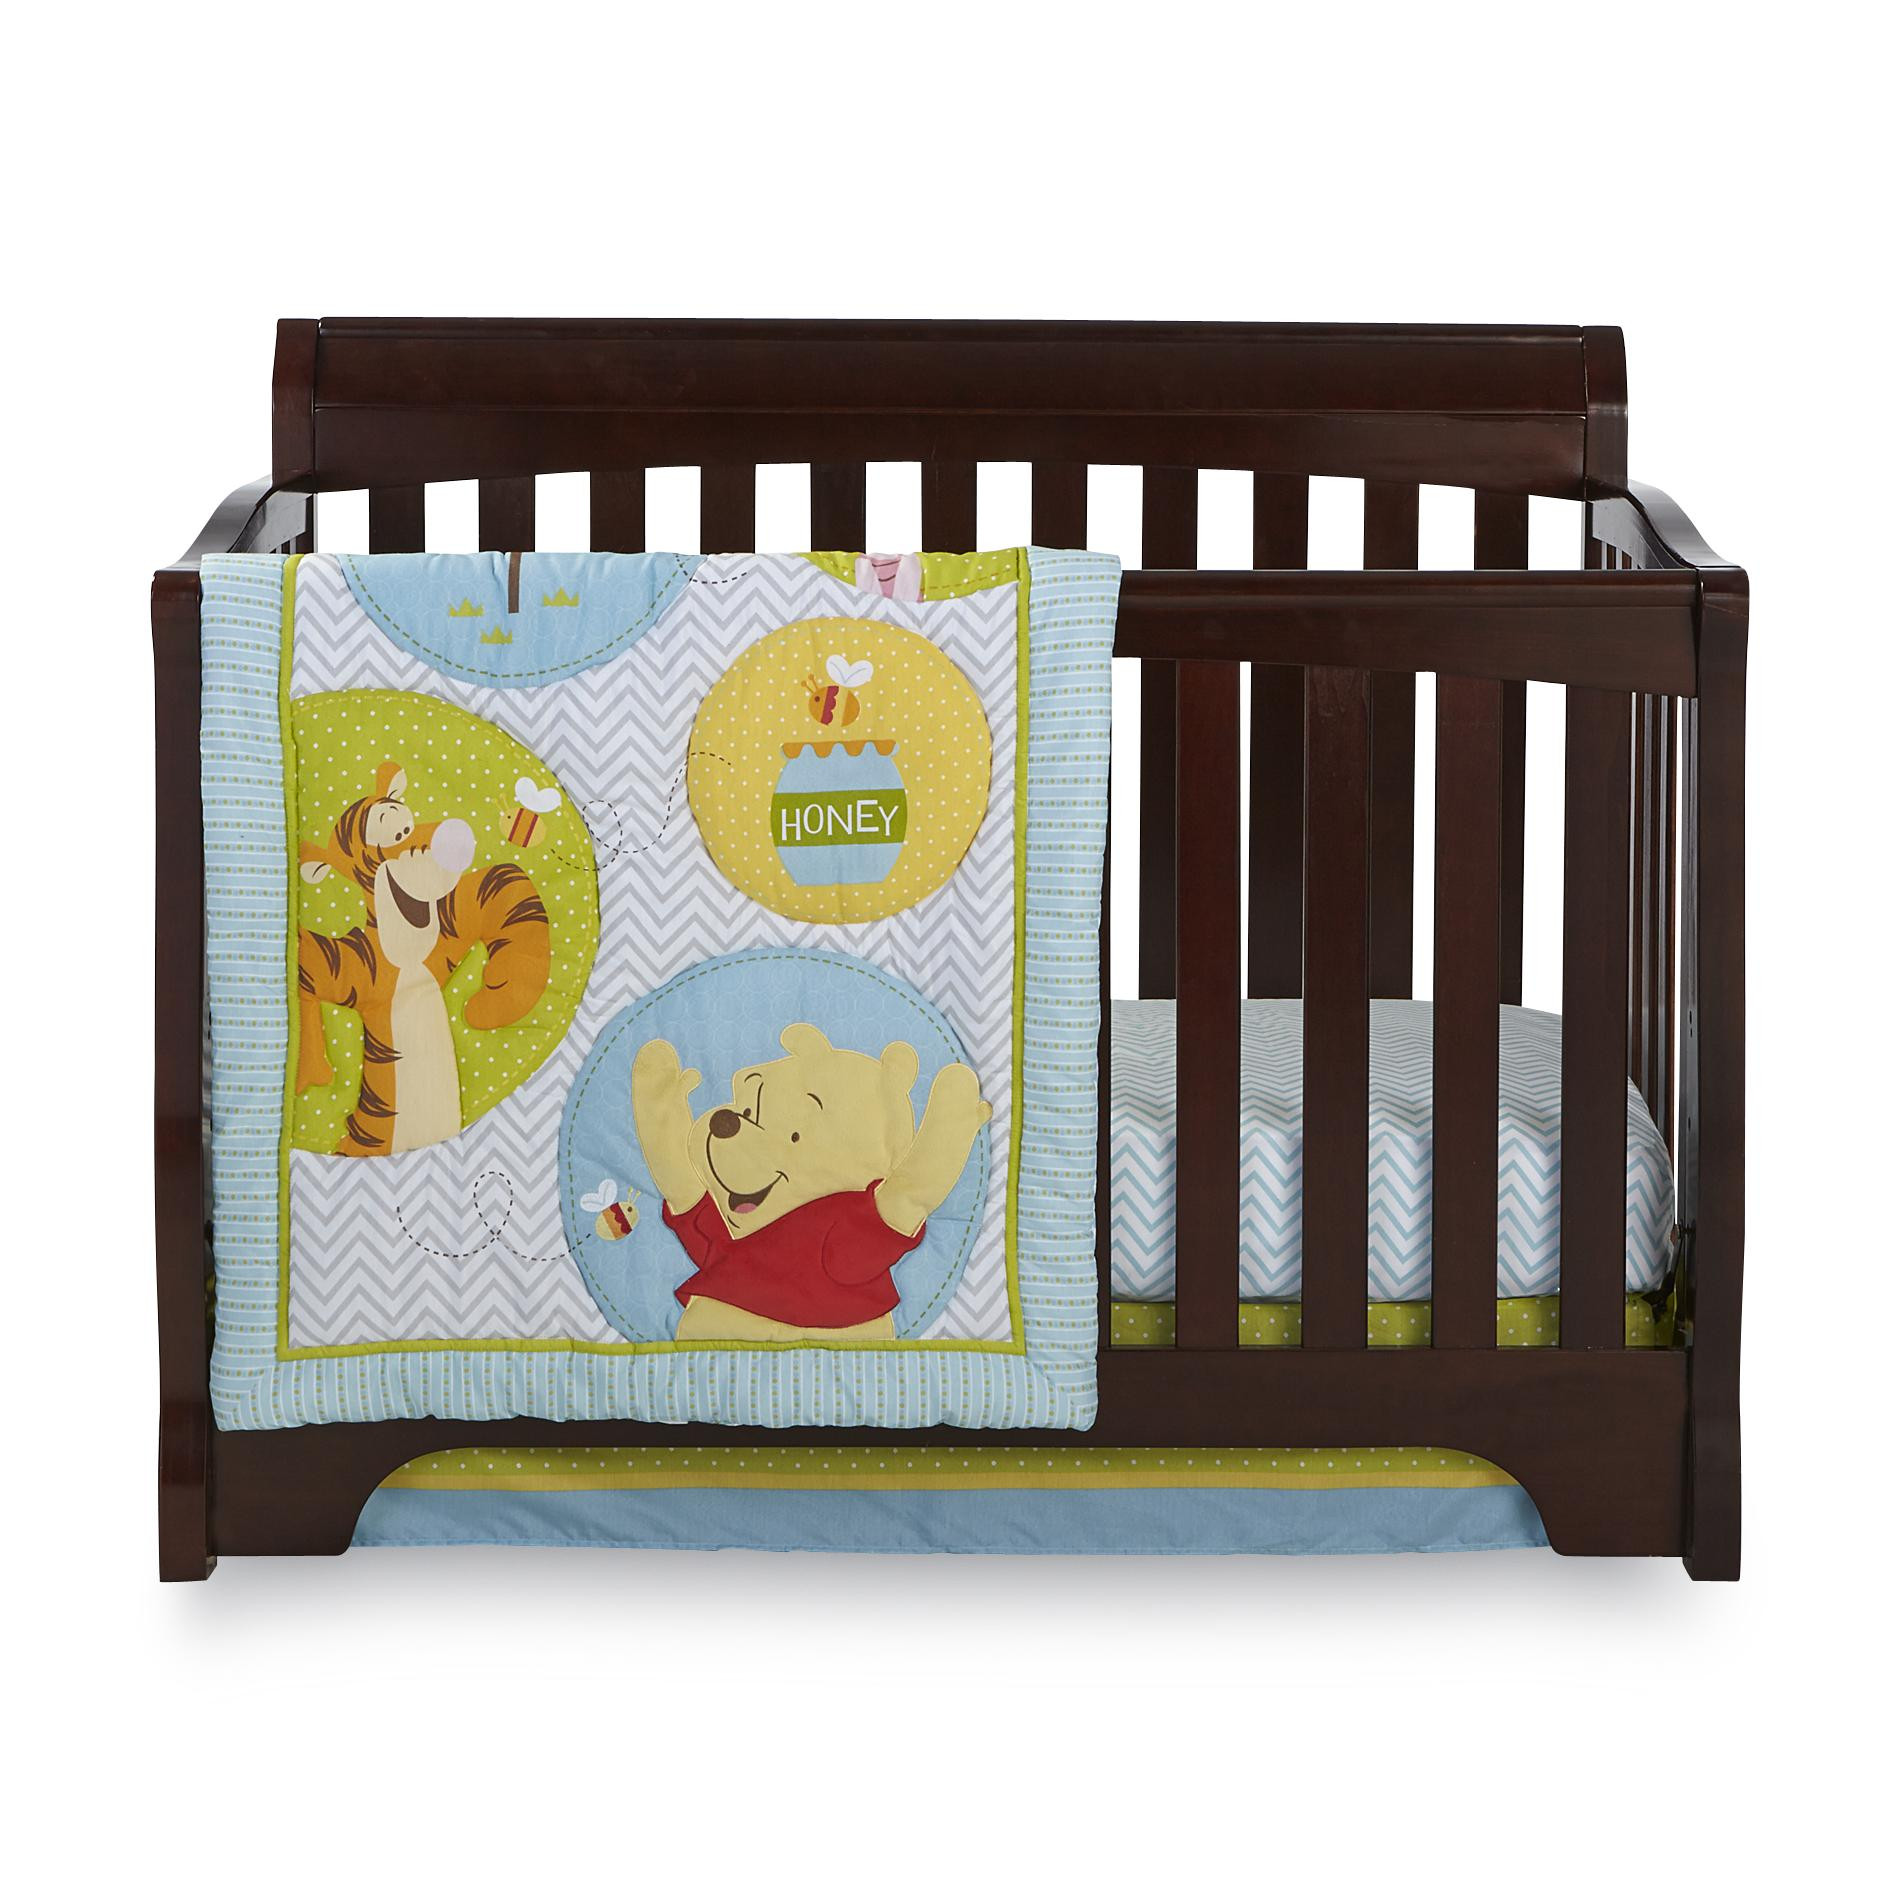 Winnie The Pooh Baby Decor
 Disney Baby Winnie the Pooh 4 Piece Crib Bedding Set